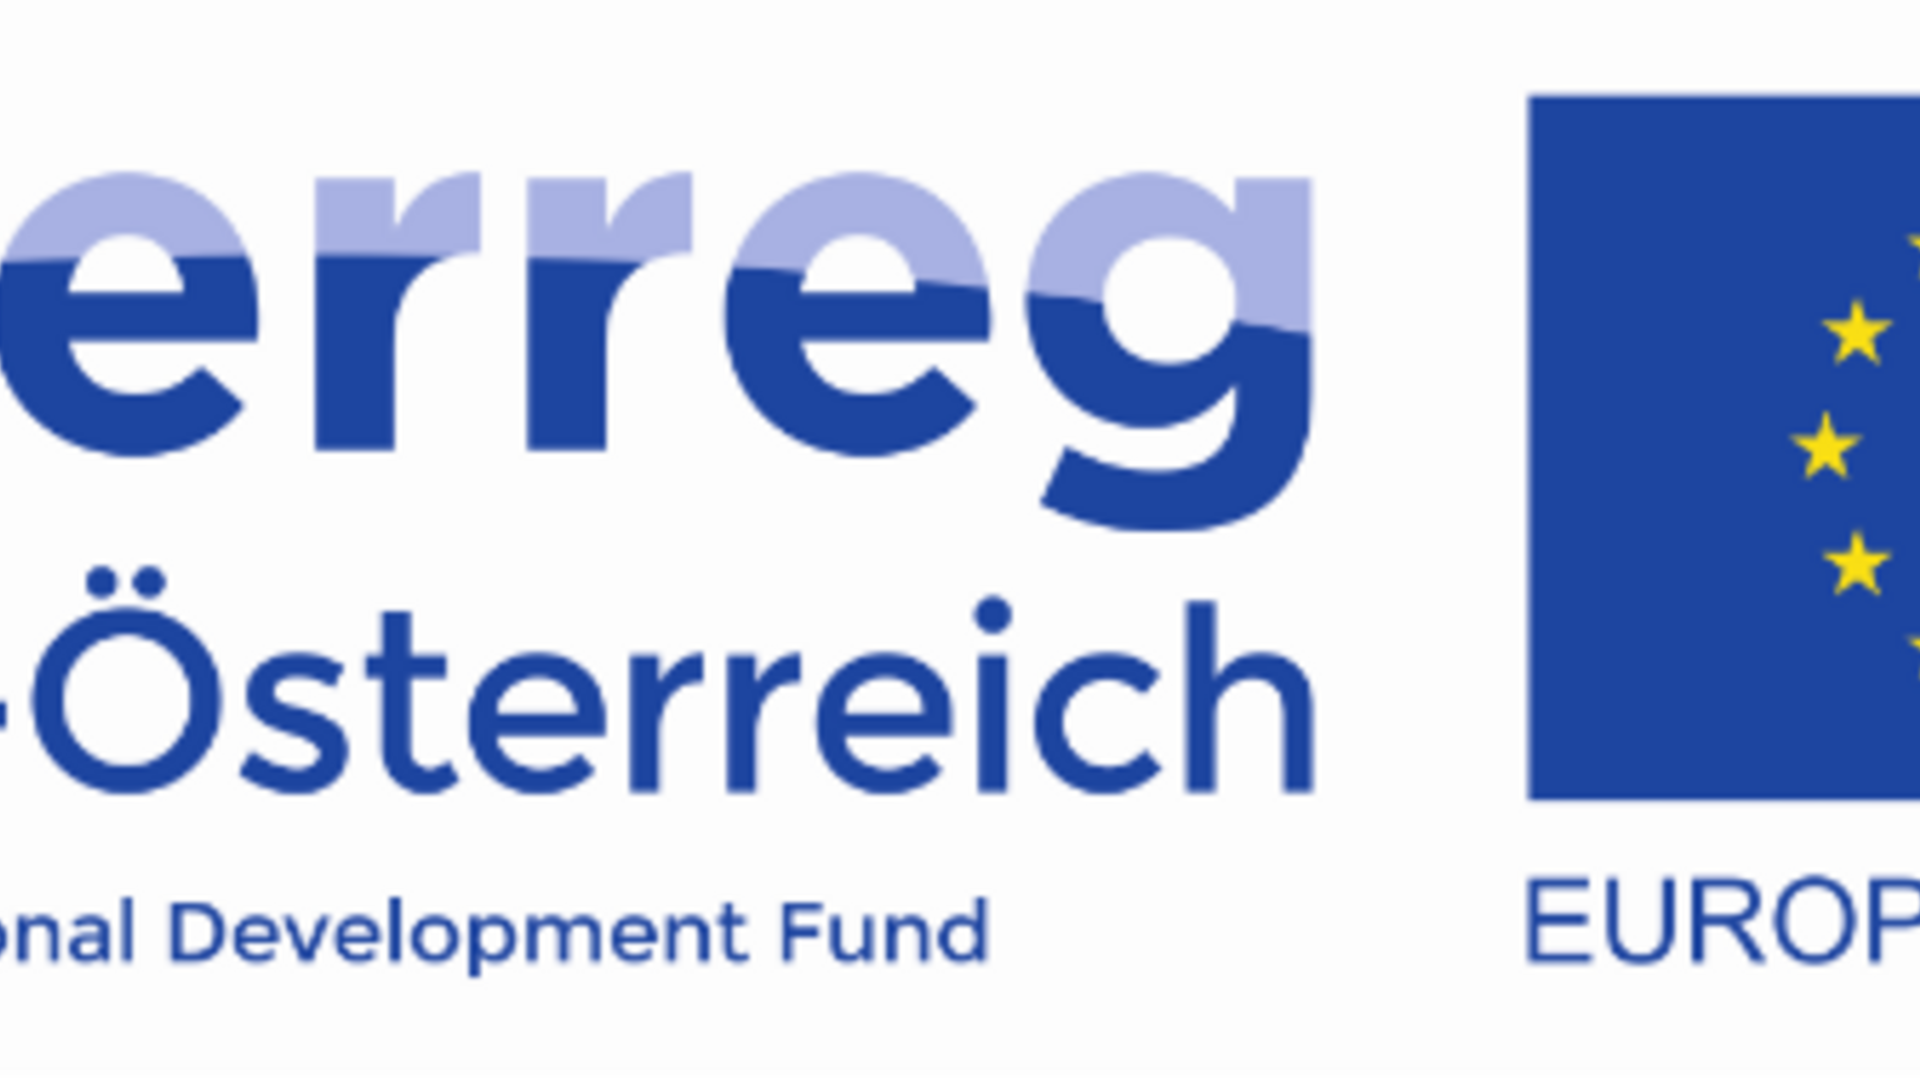 INTERREG Logo